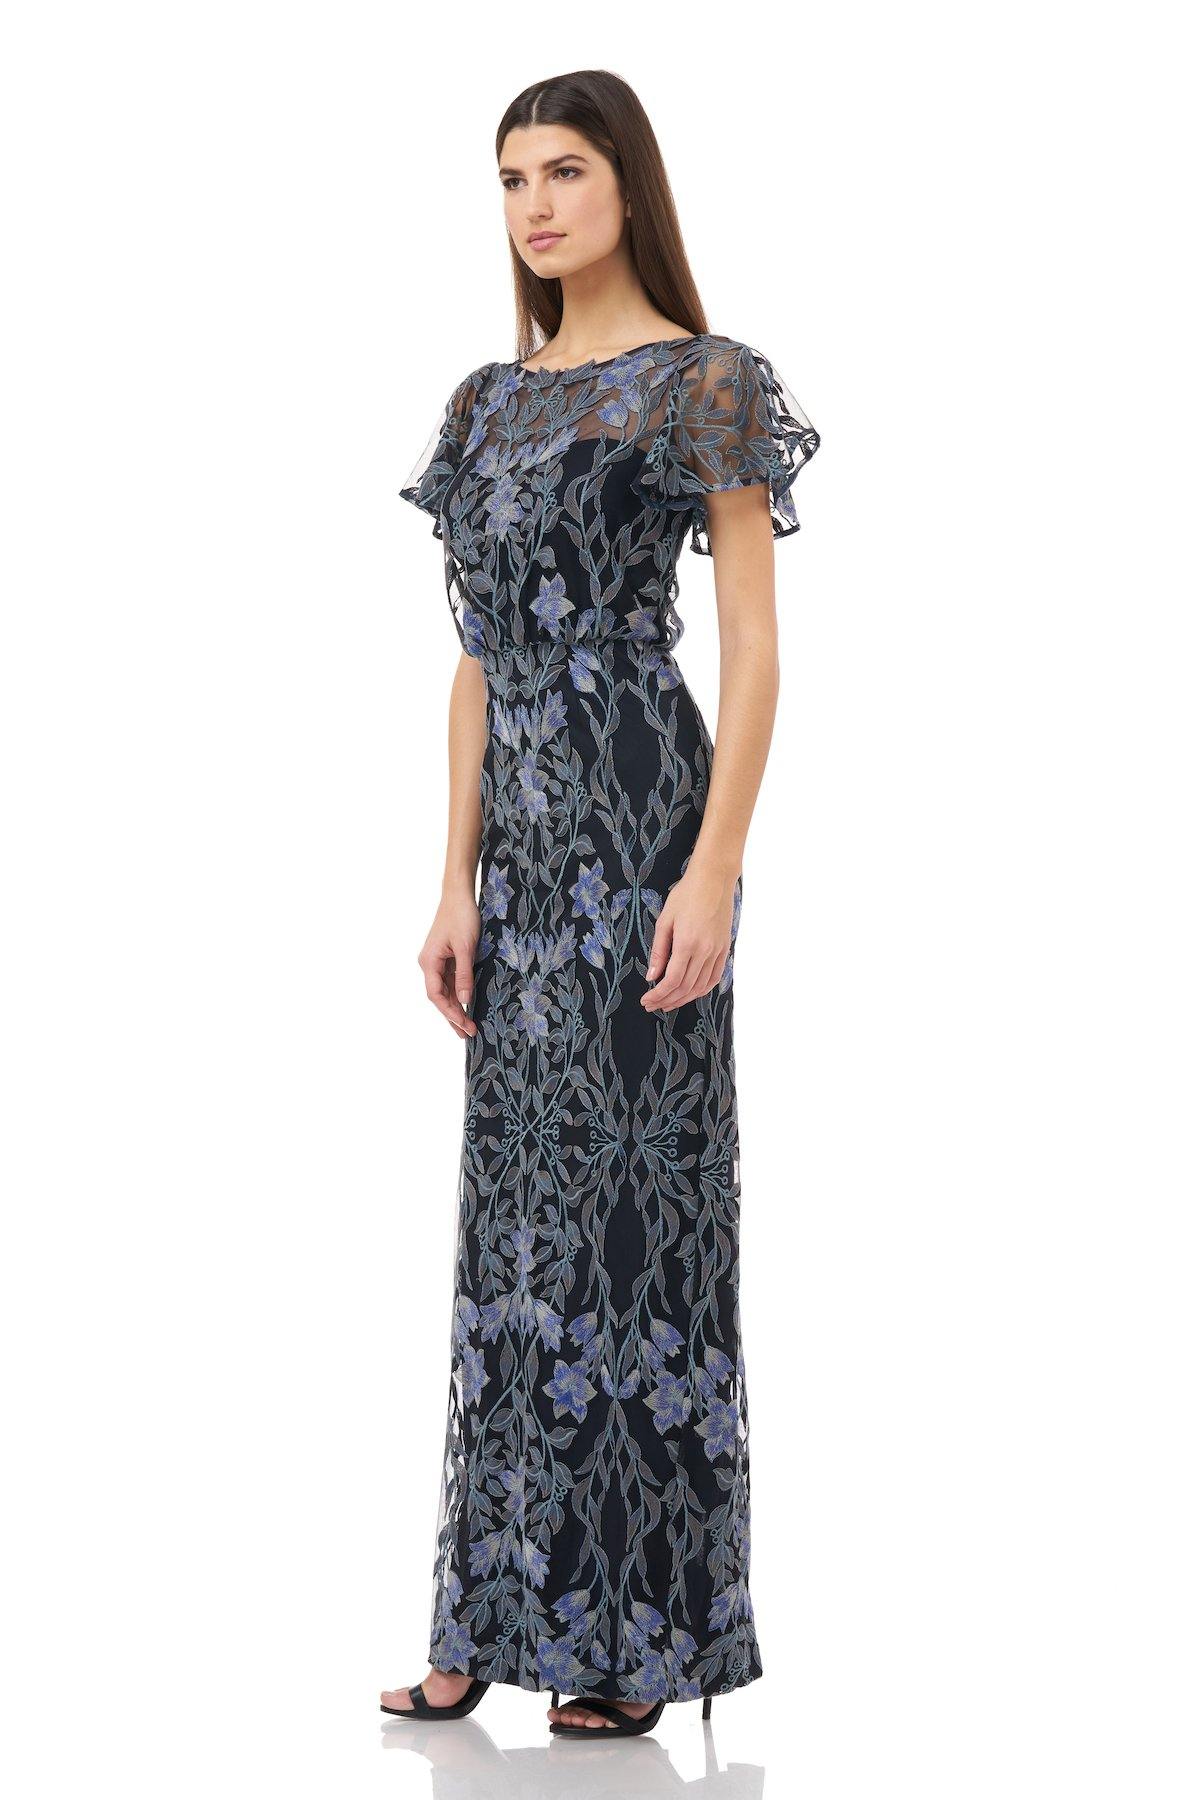 JS Collections Long Formal Blouson Mesh Dress 866961 - The Dress Outlet